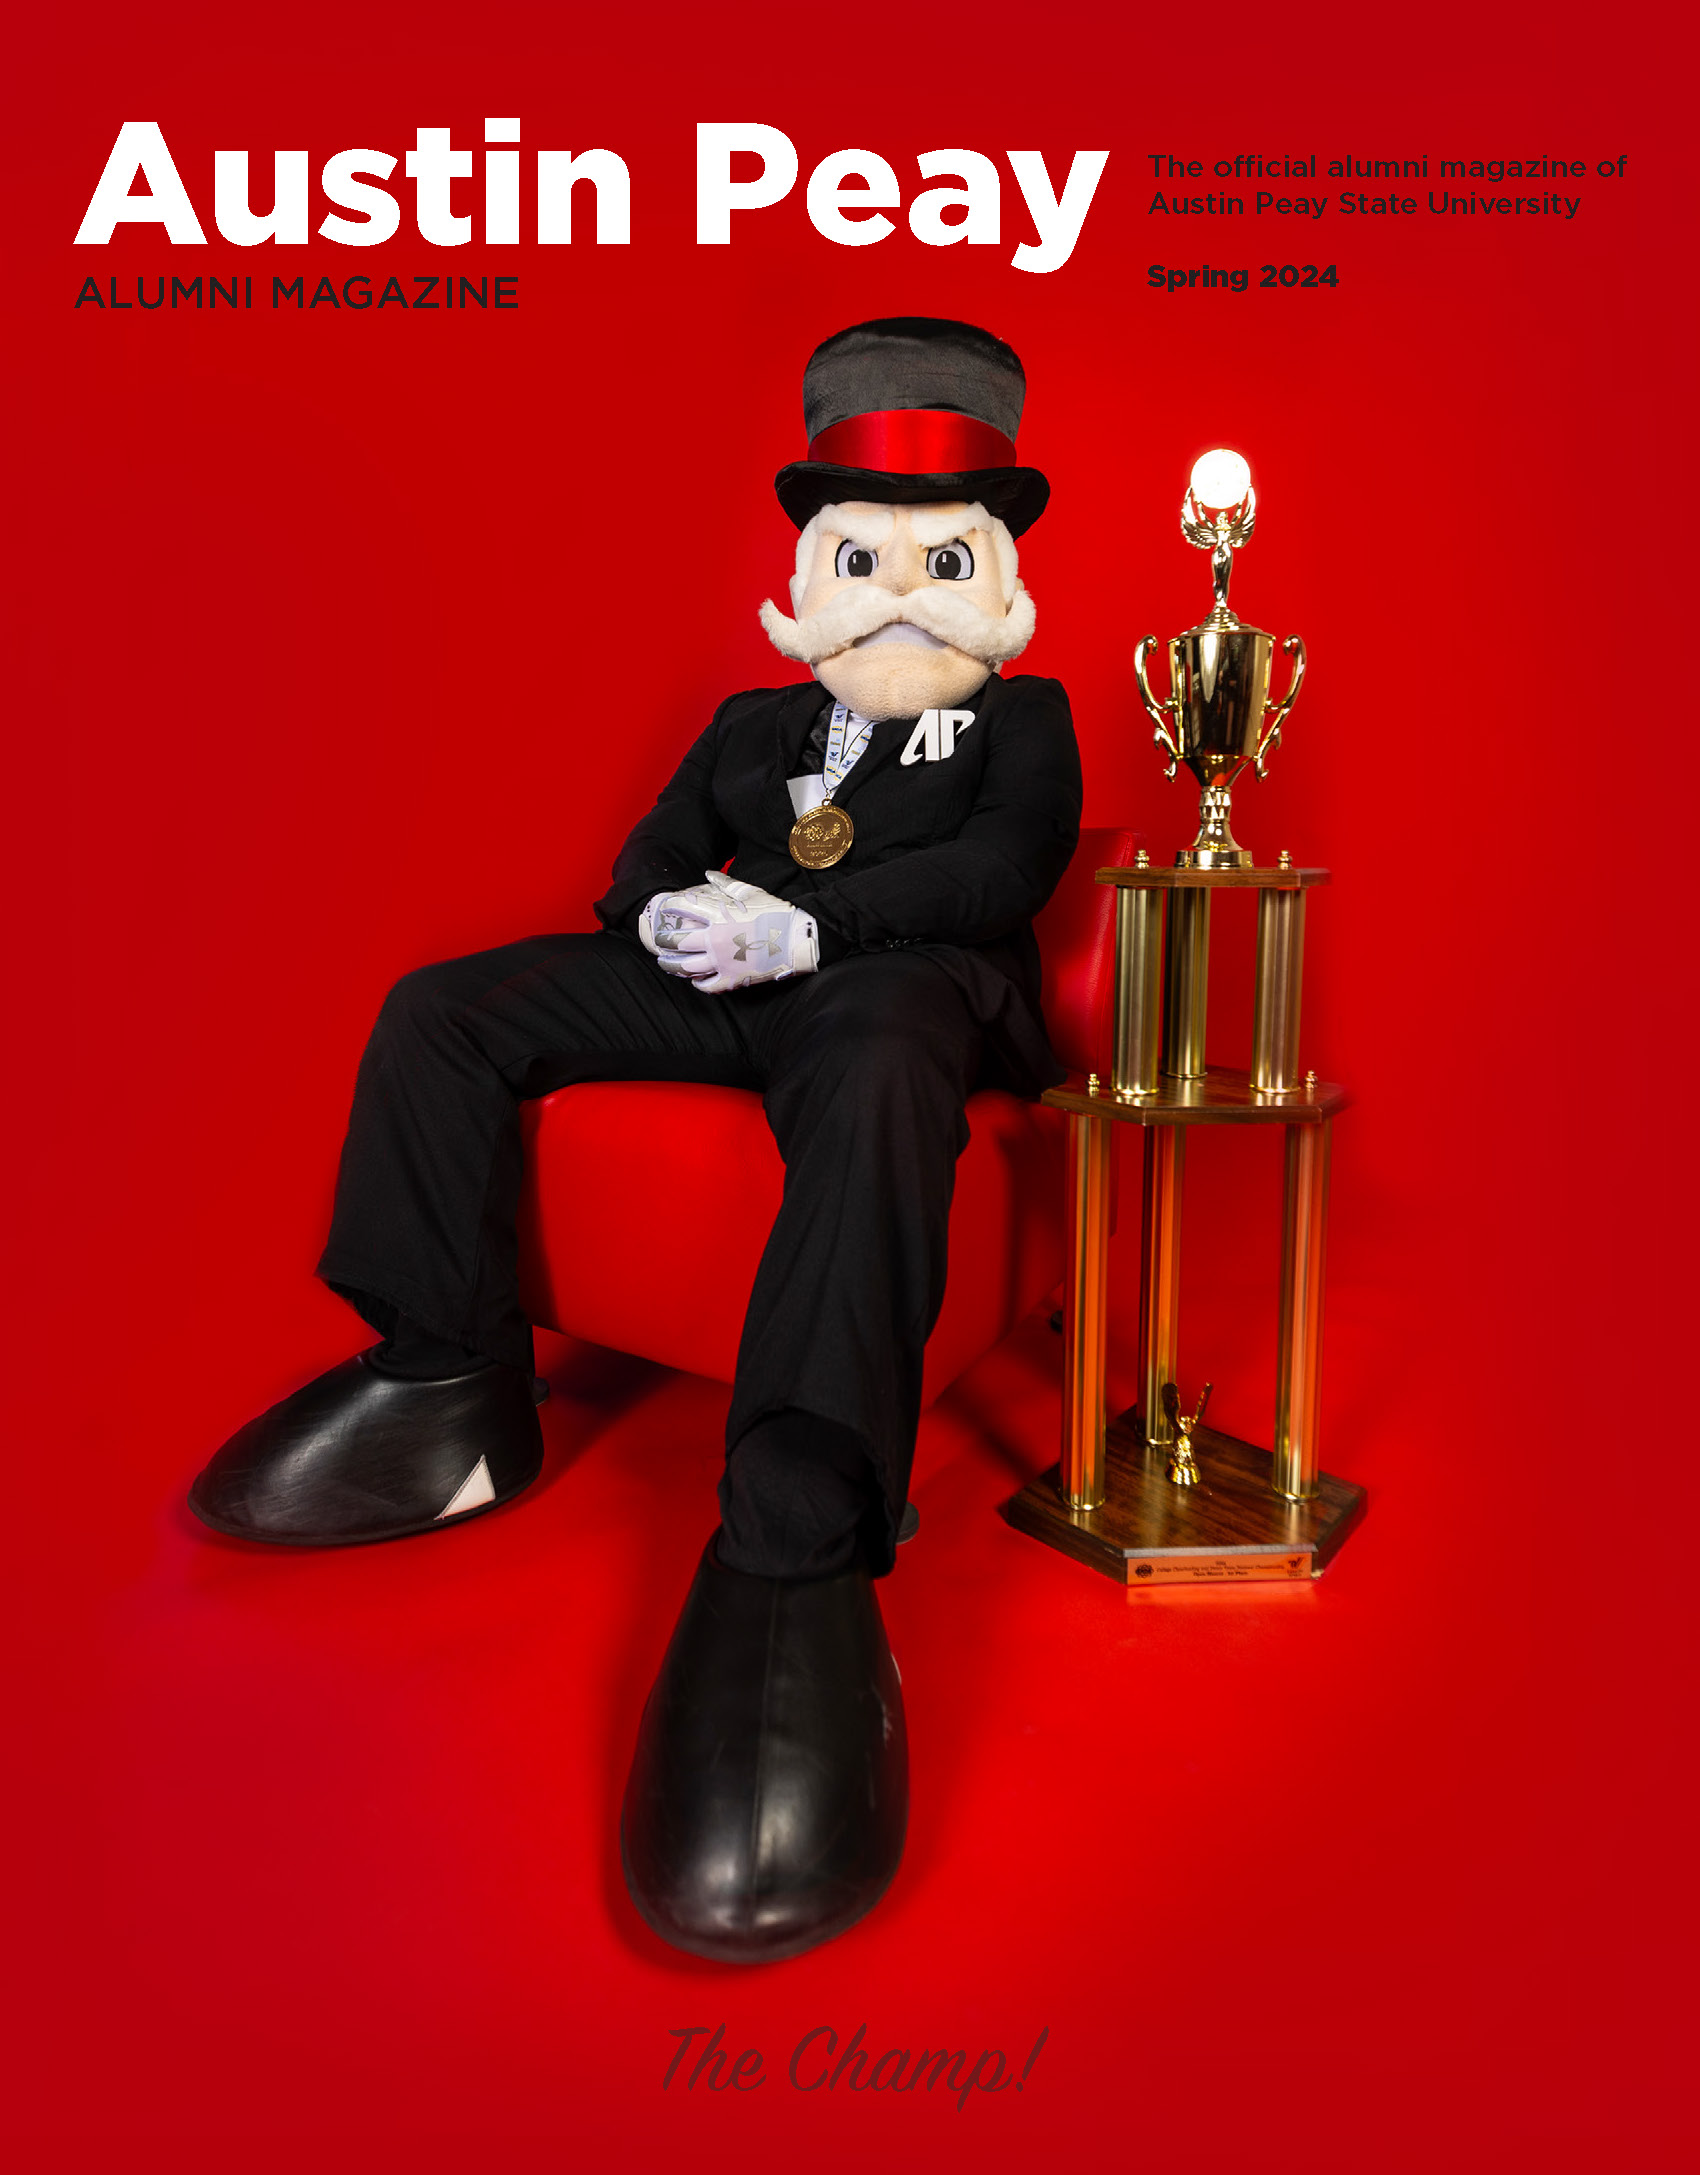 APSU Alumni Magazine cover for Spring 2024